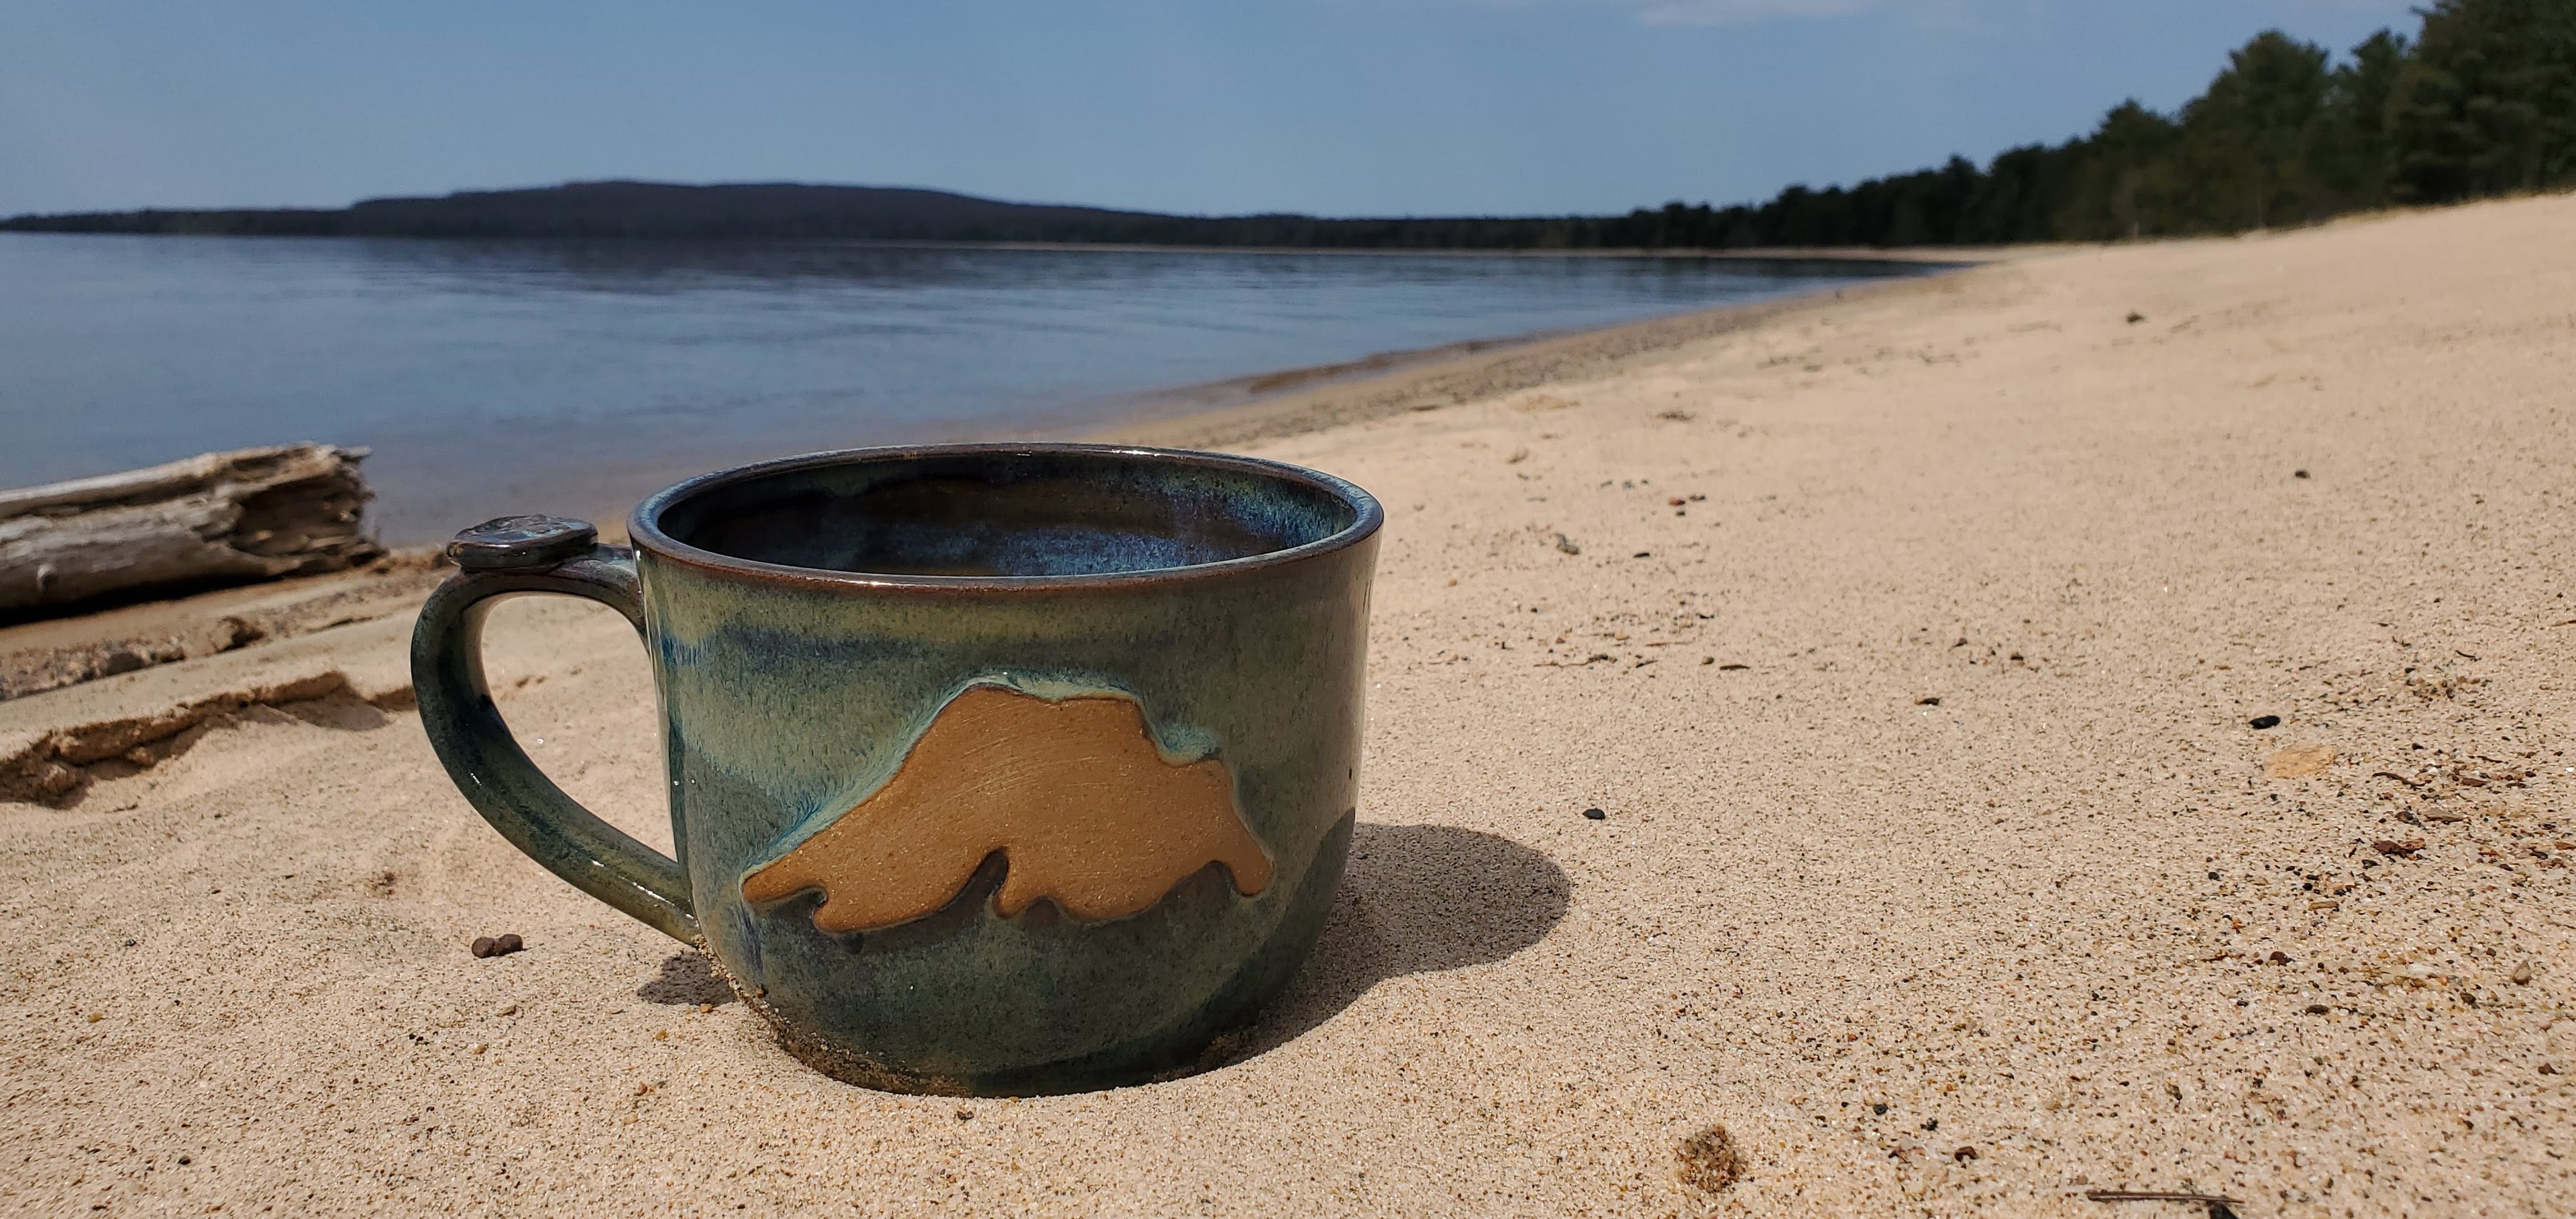 Green Cabin Pottery Mug on the beach